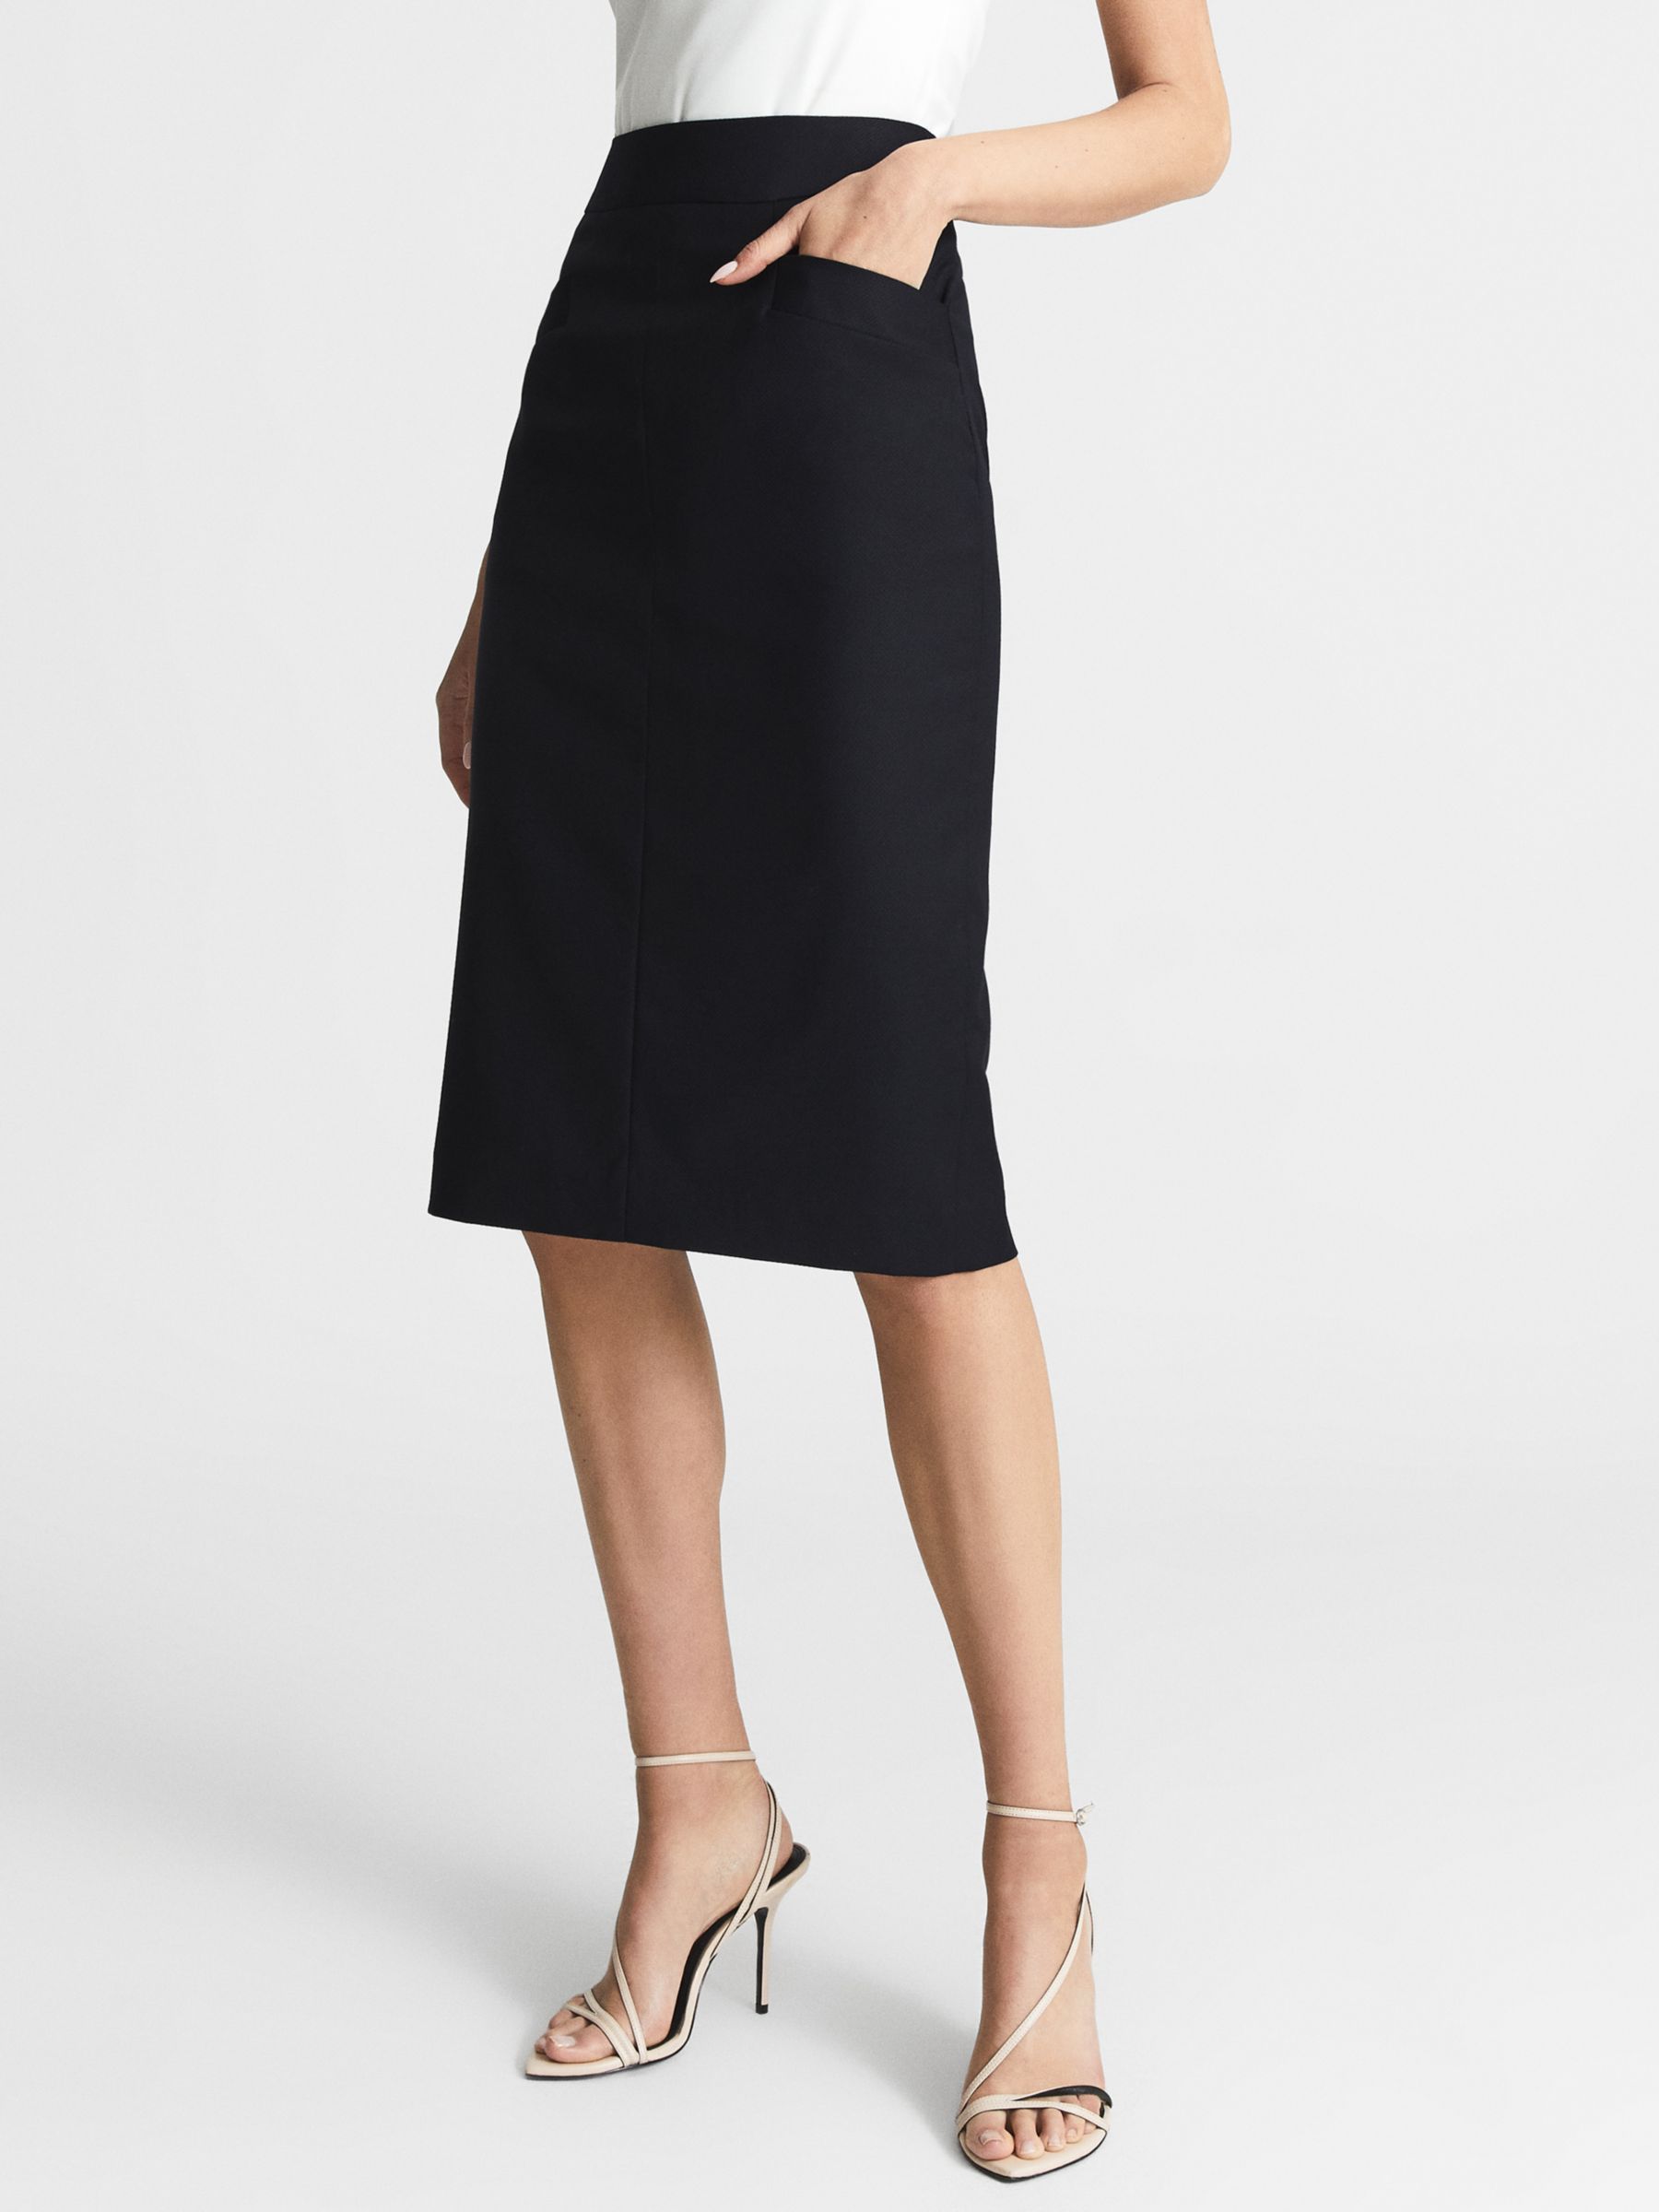 Reiss Haisley Wool Blend Pencil Skirt, Navy at John Lewis & Partners